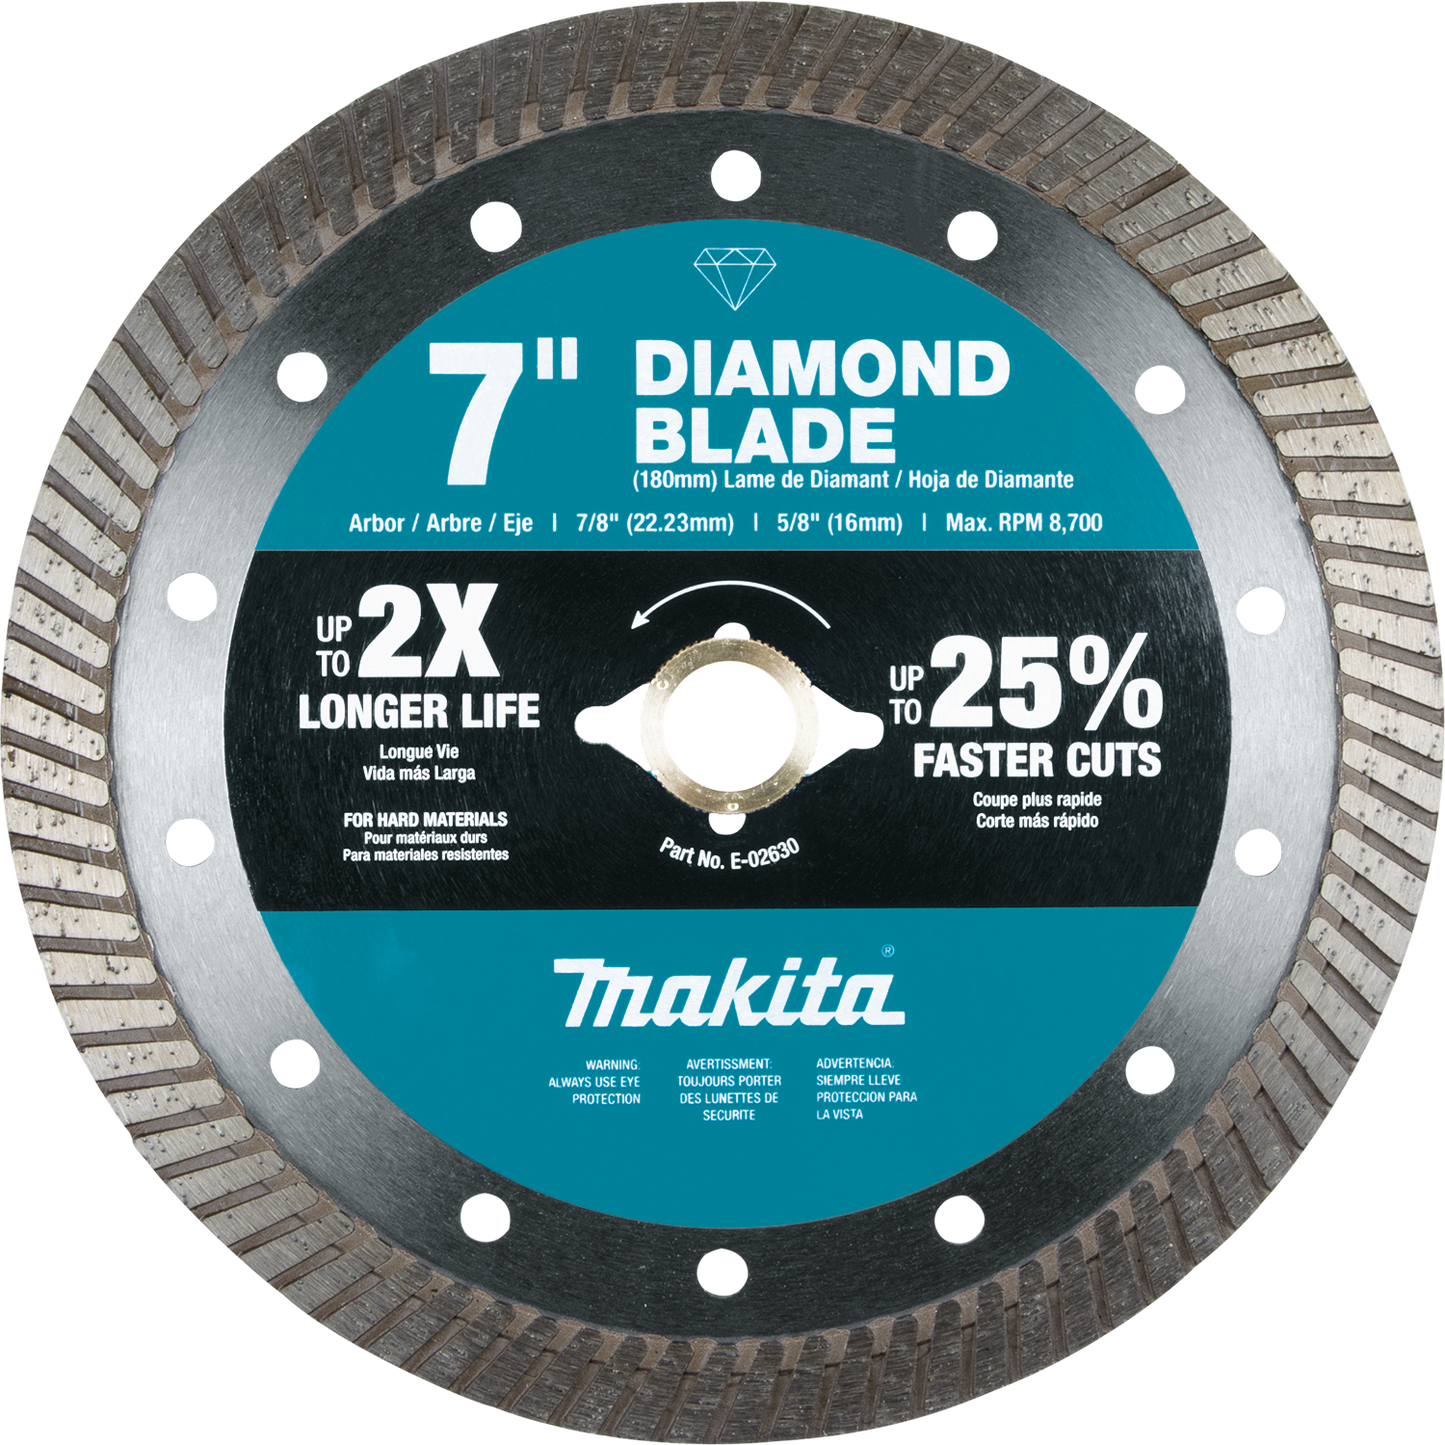 Makita E-02630 7" Diamond Blade, Turbo, Hard Material